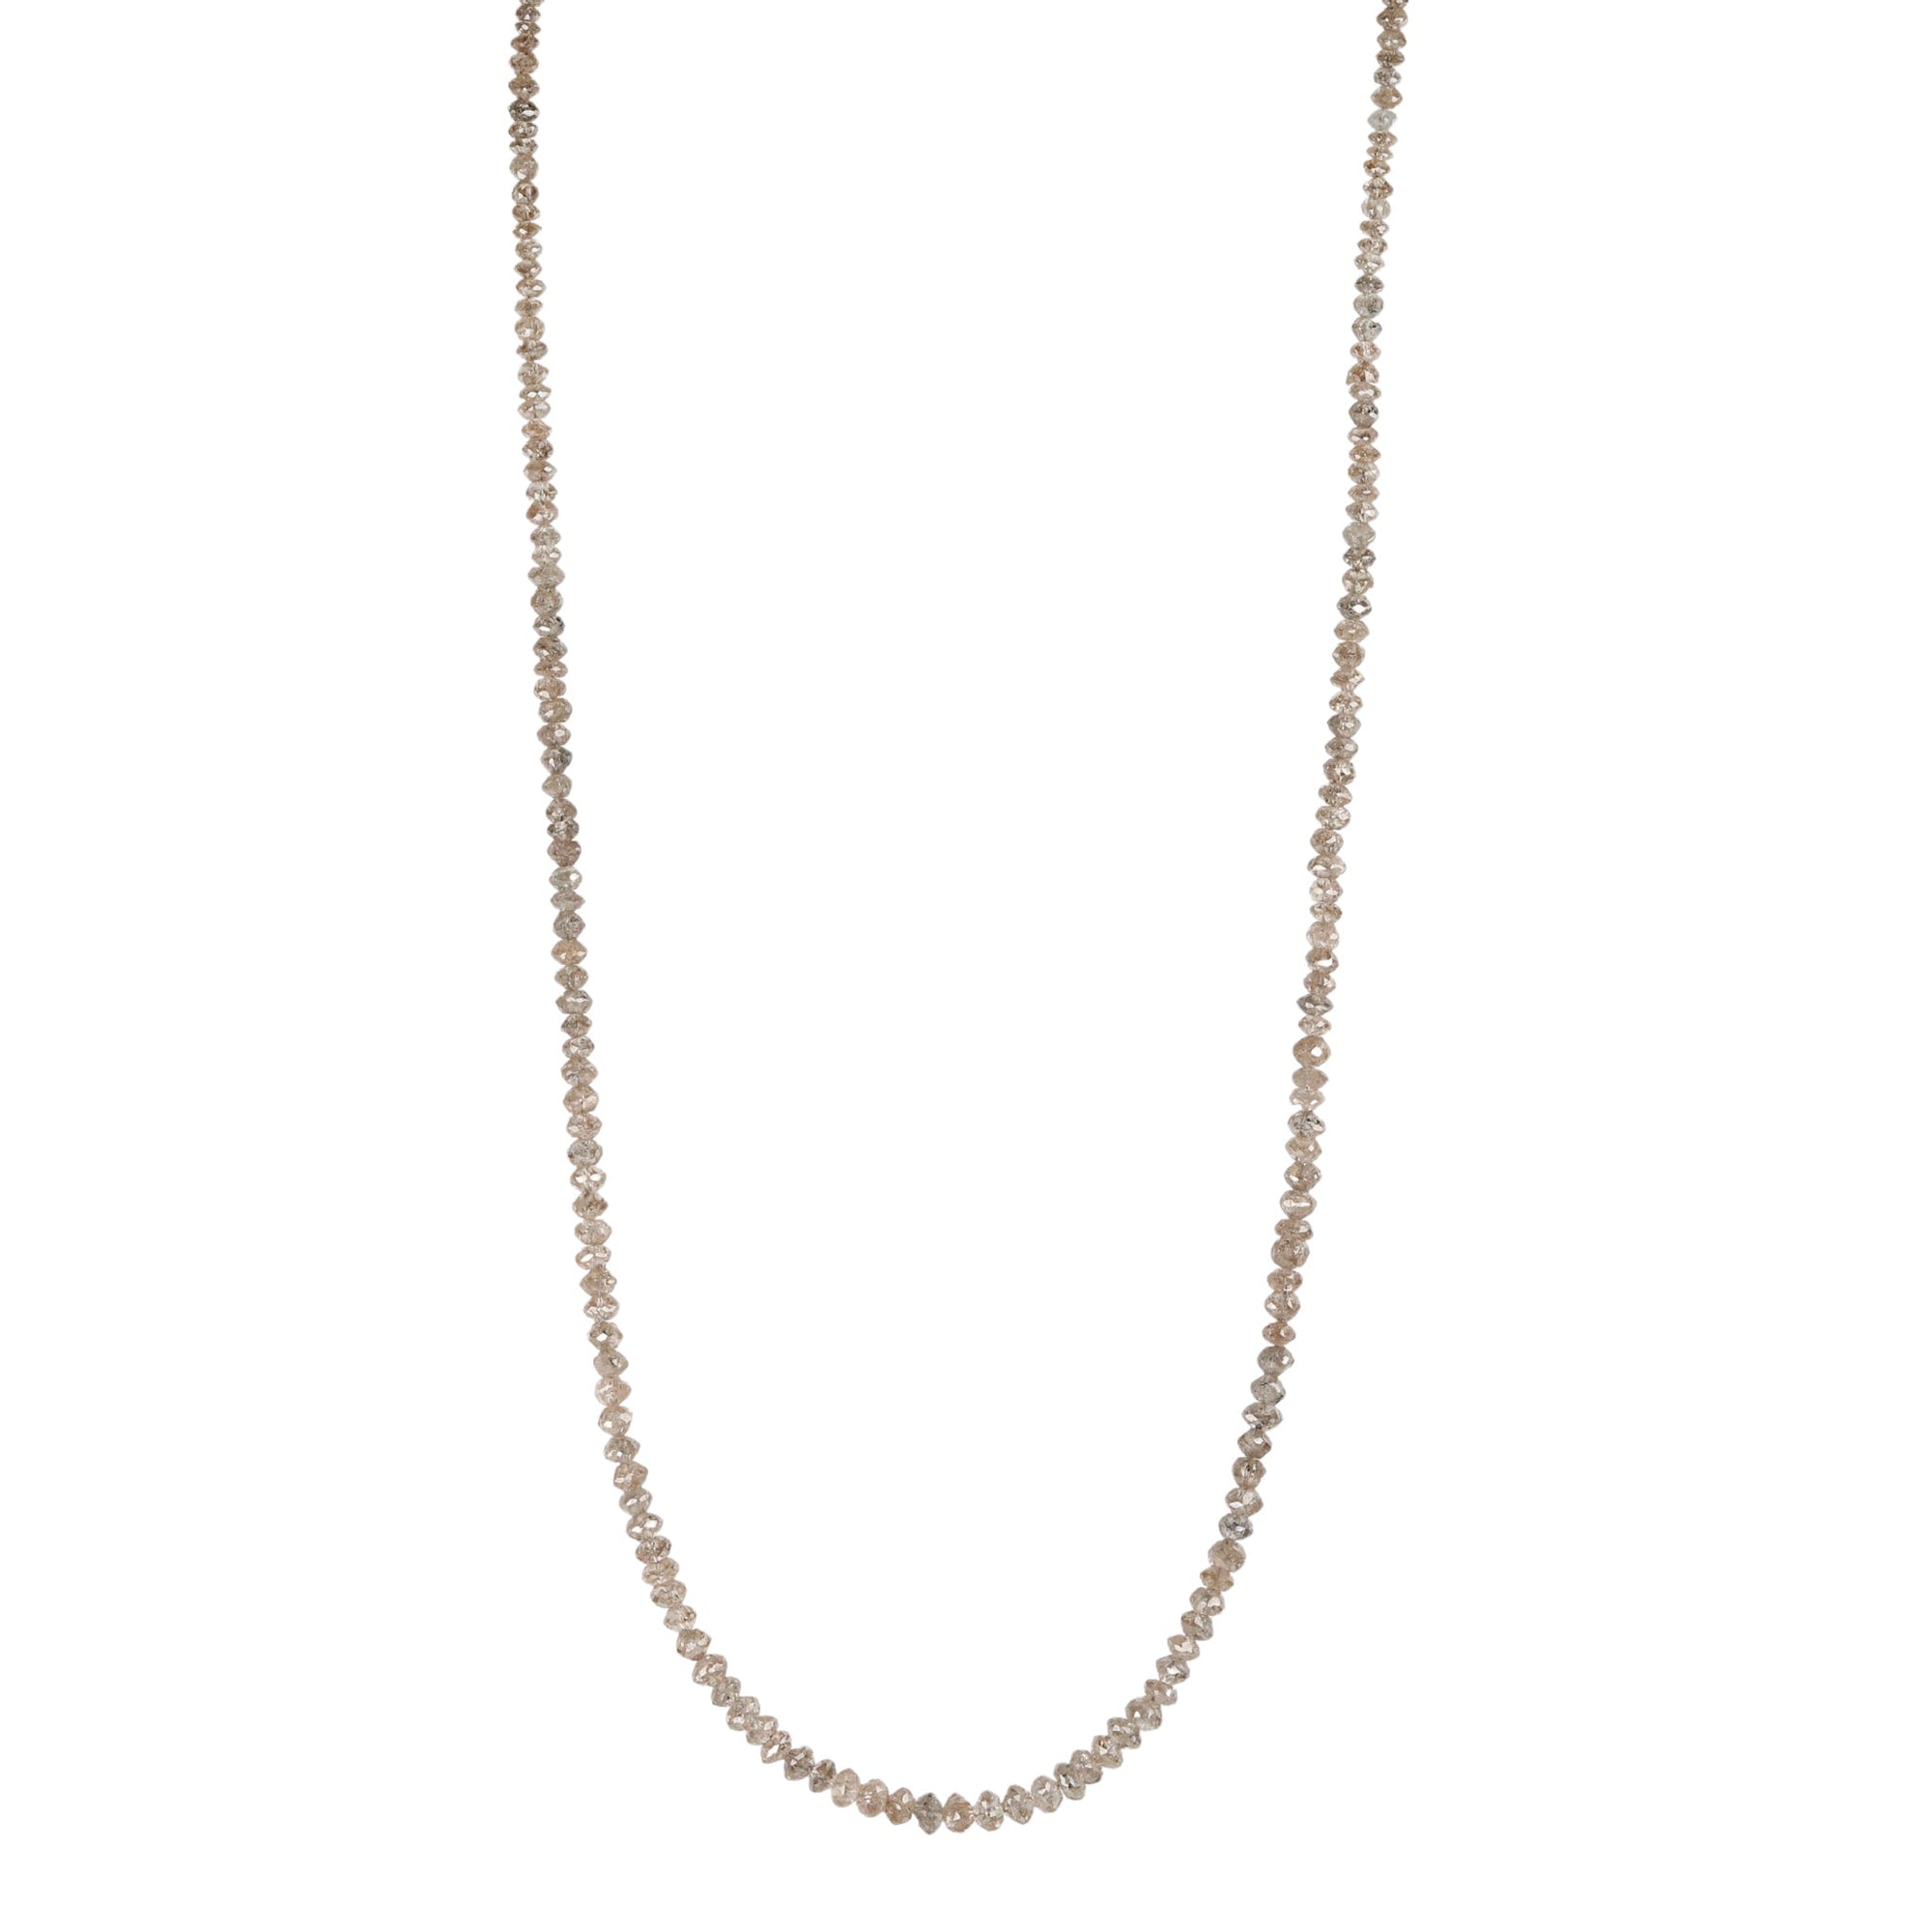 One of a Kind Faceted Lush Cognac Diamond Beaded Necklace - Peridot Fine Jewelry - Zahava